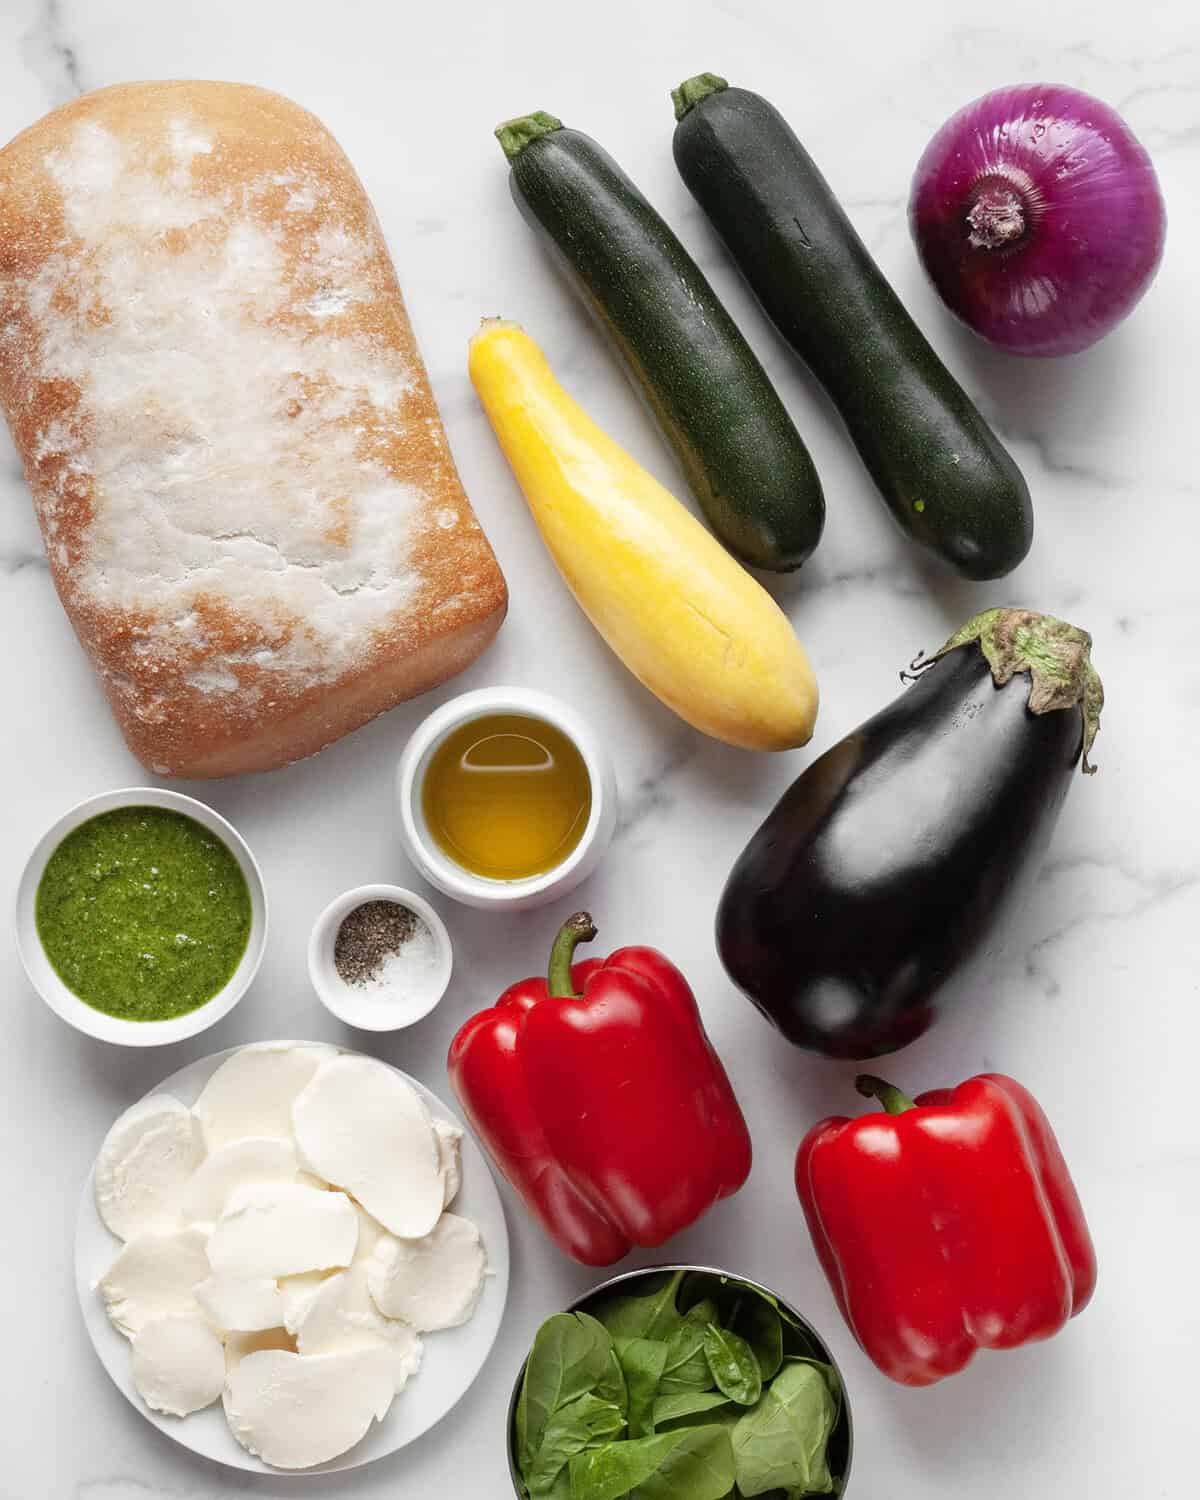 Ingredients including bread, vegetables, pesto, olive oil, salt, pepper and mozzarella.